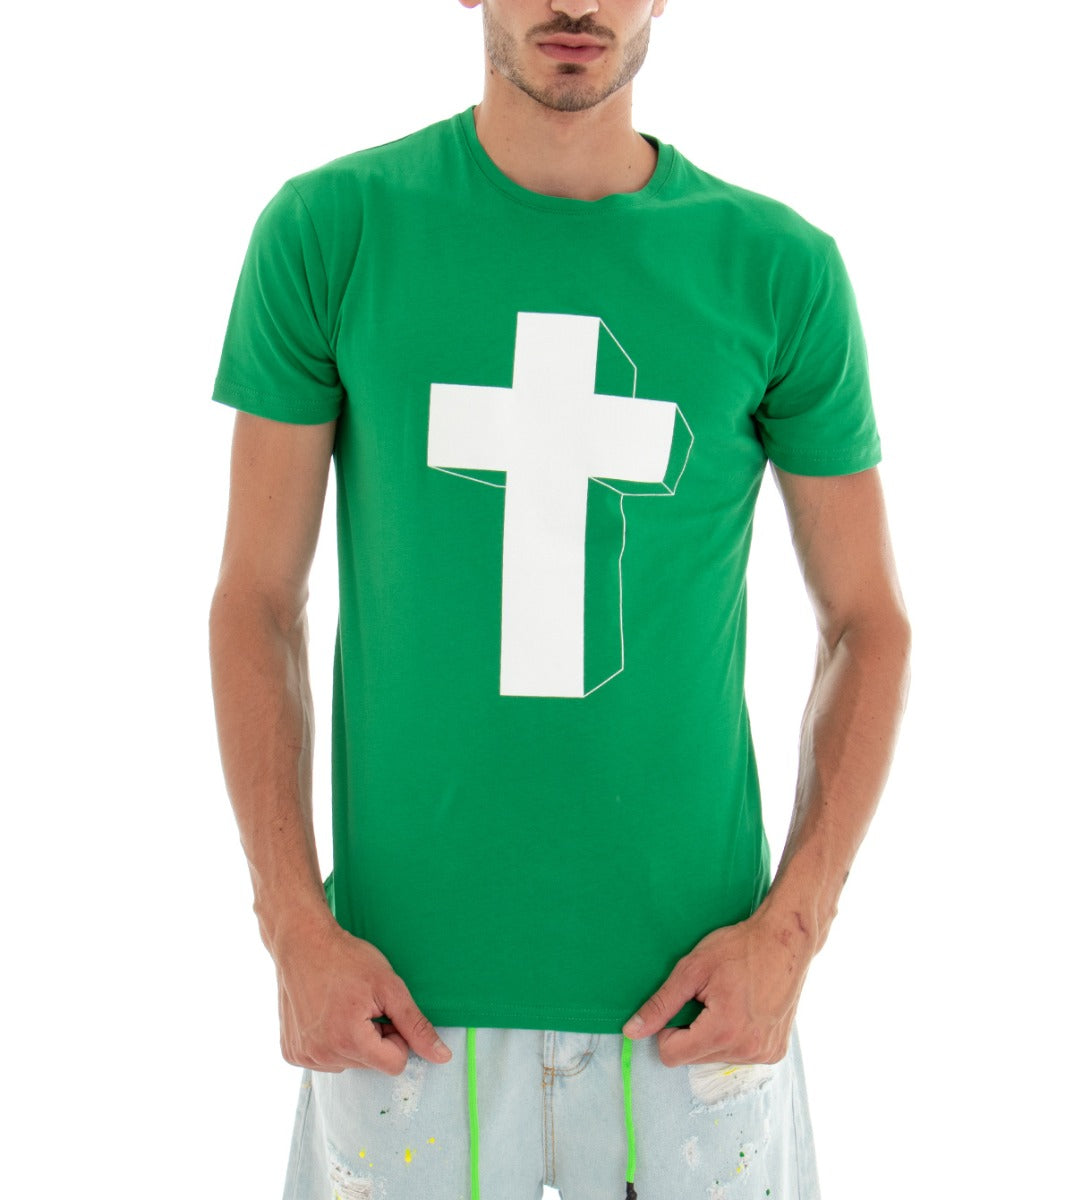 Men's T-shirt Short Sleeve Solid Color Green Cross Print Crew Neck Cotton GIOSAL